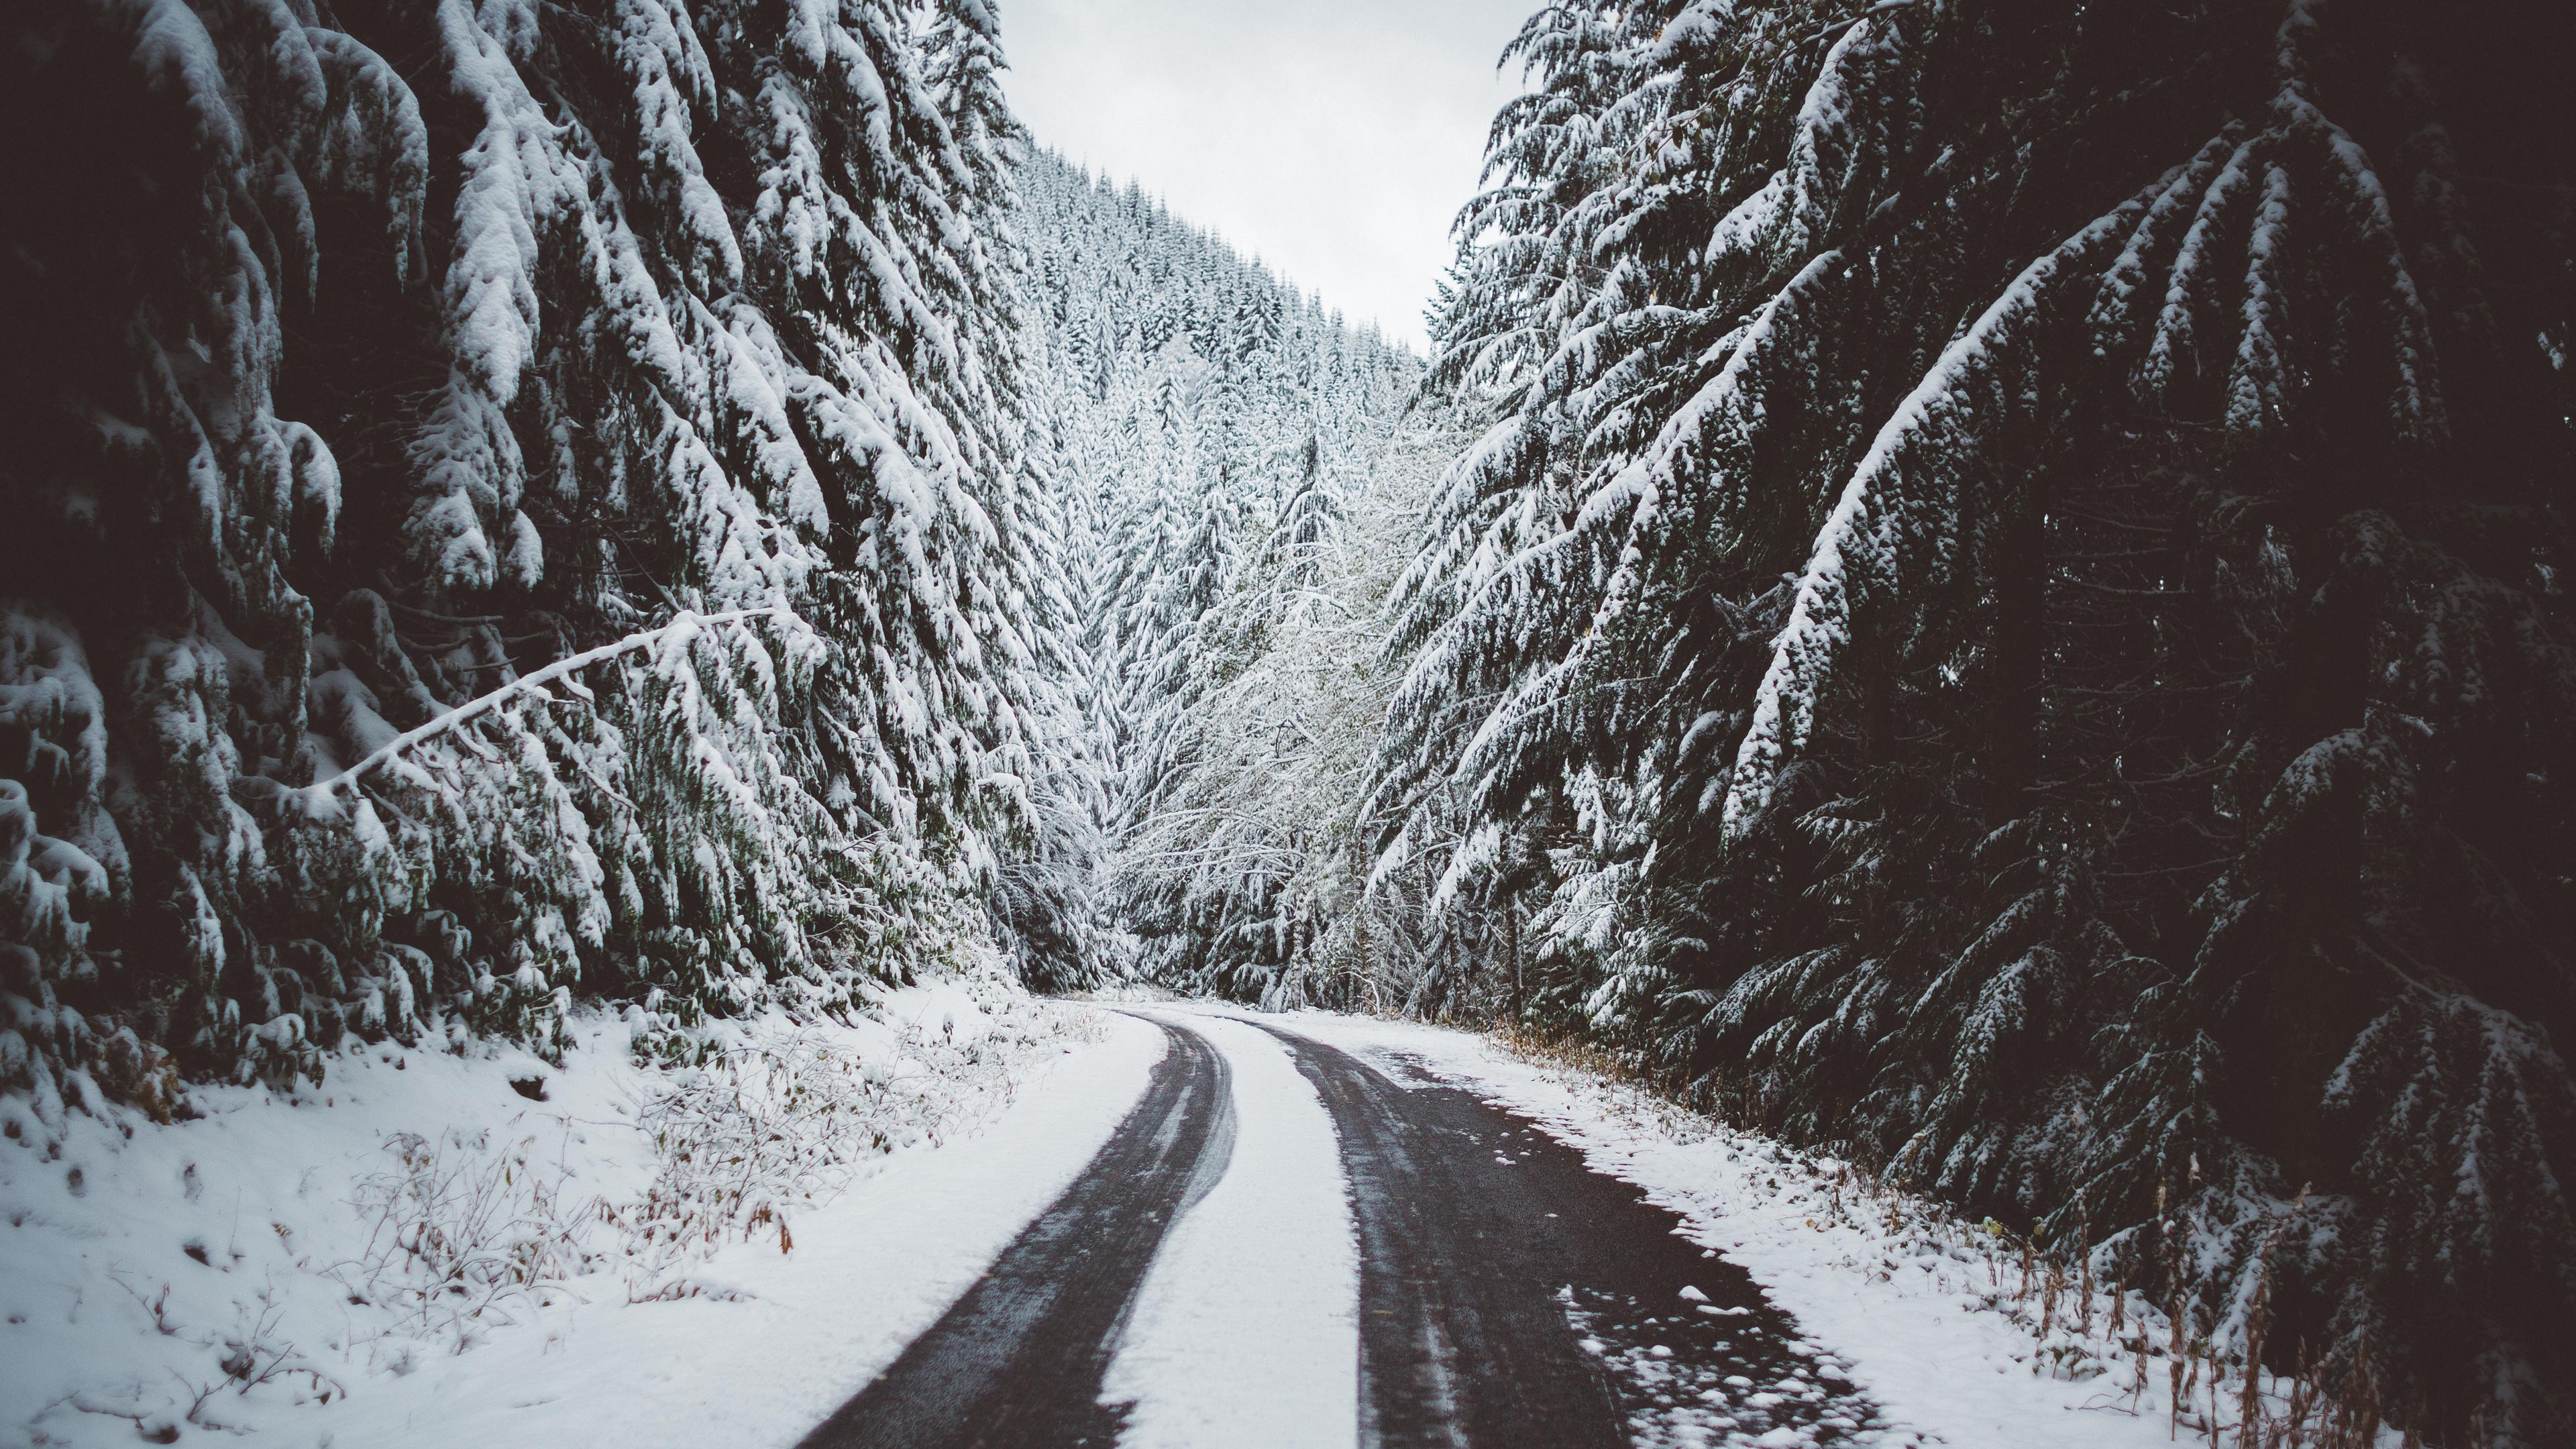 Download wallpaper 3840x2160 road, snow, trees, winter 4k